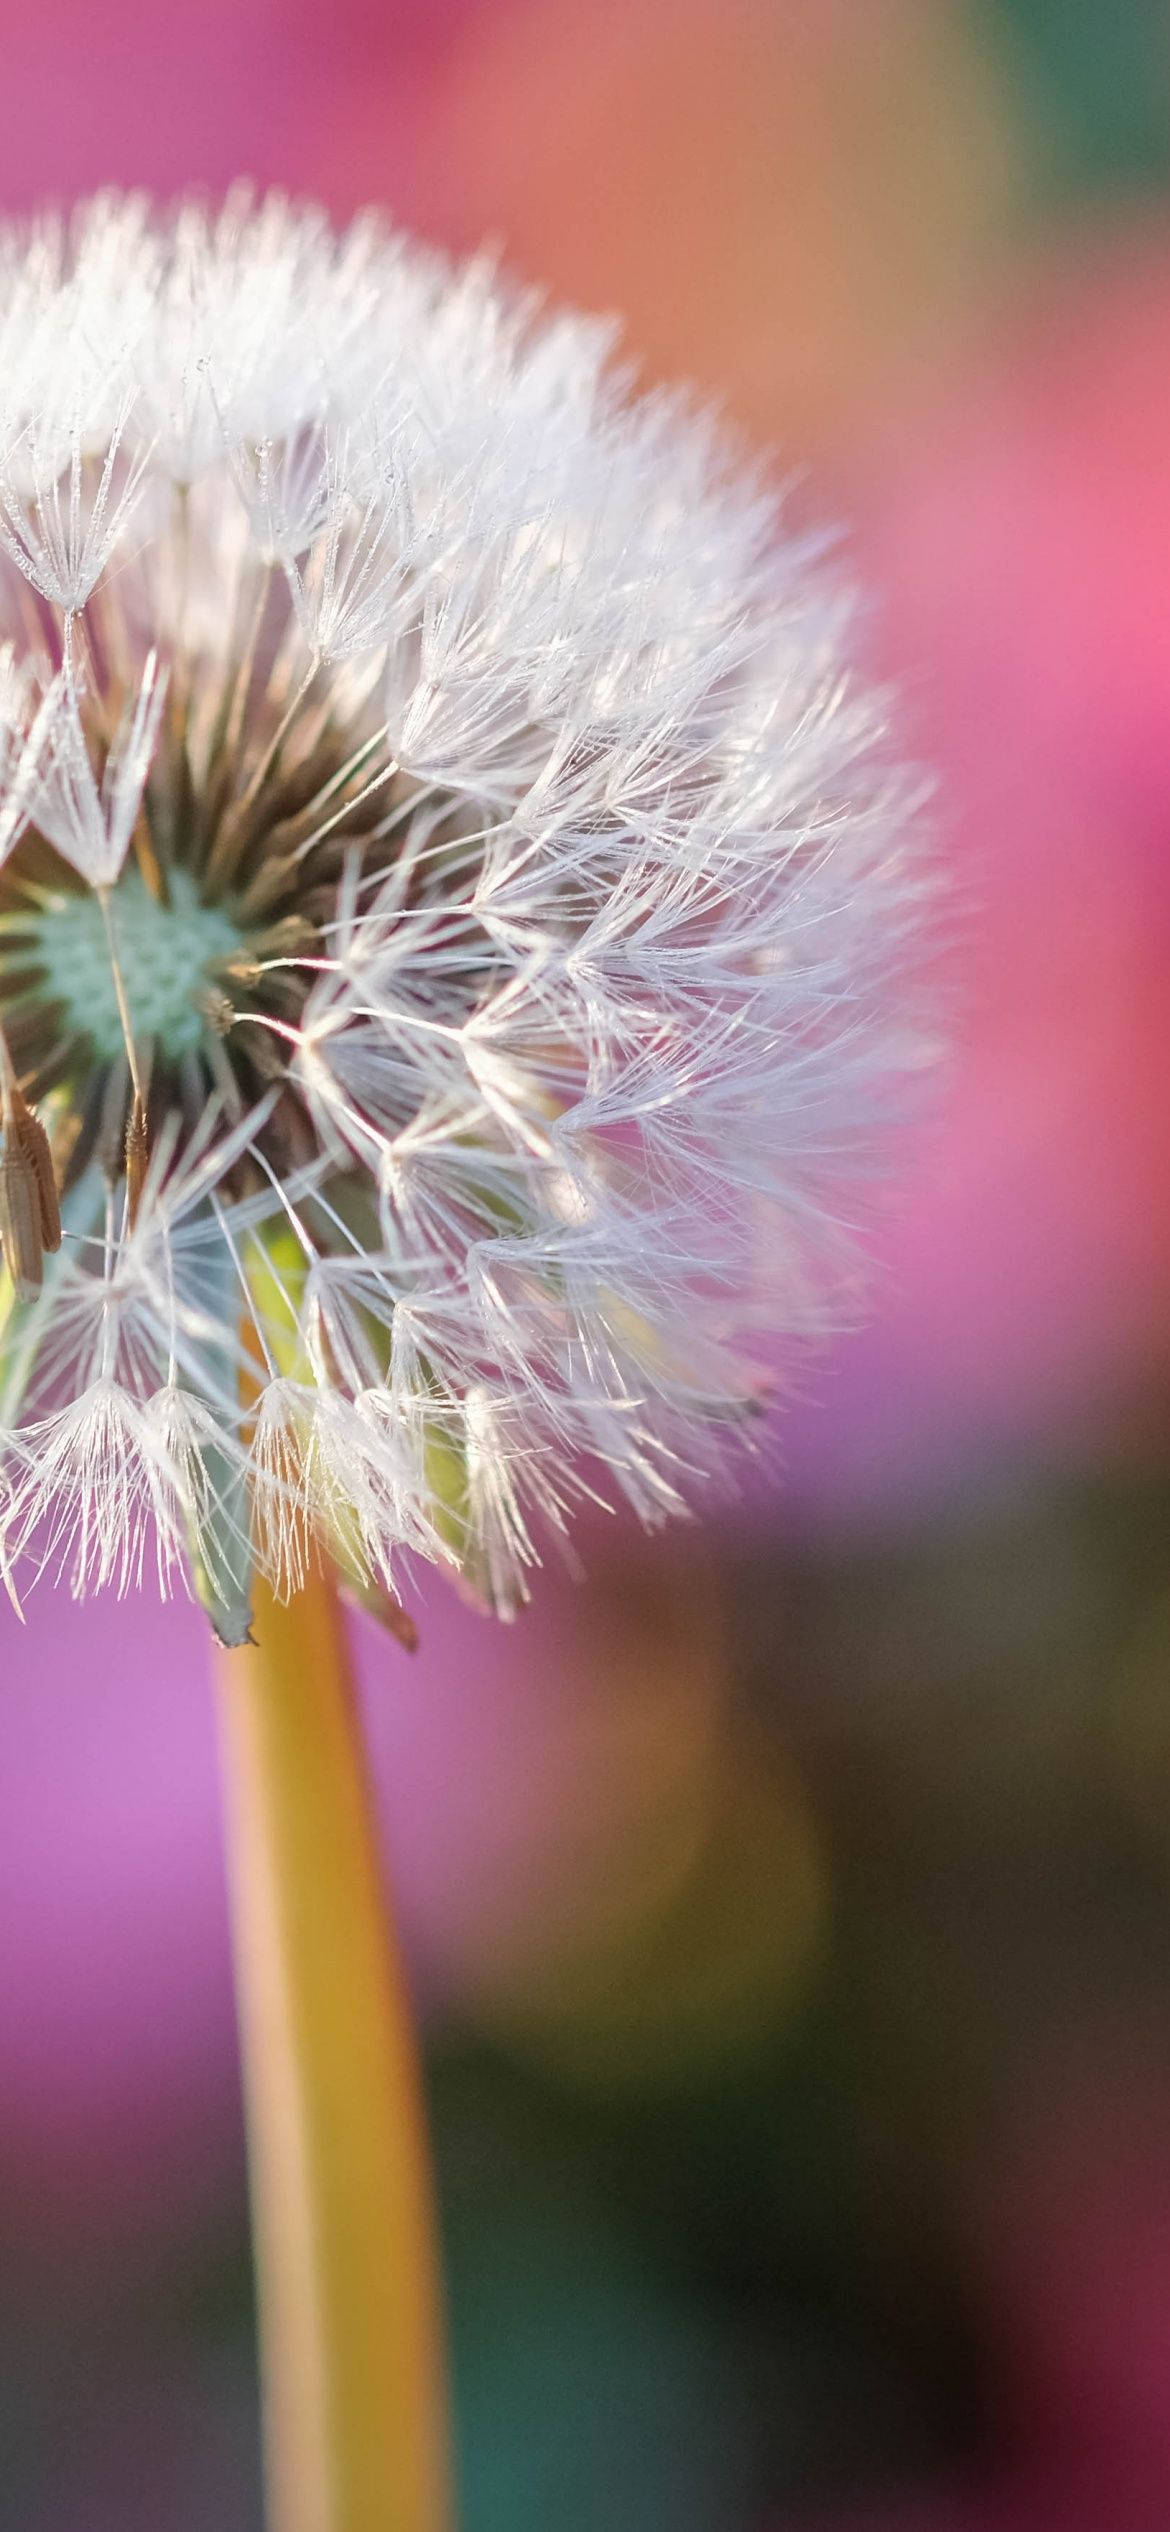 Dandelion flower Wallpaper 4K, Blur background, Selective Focus